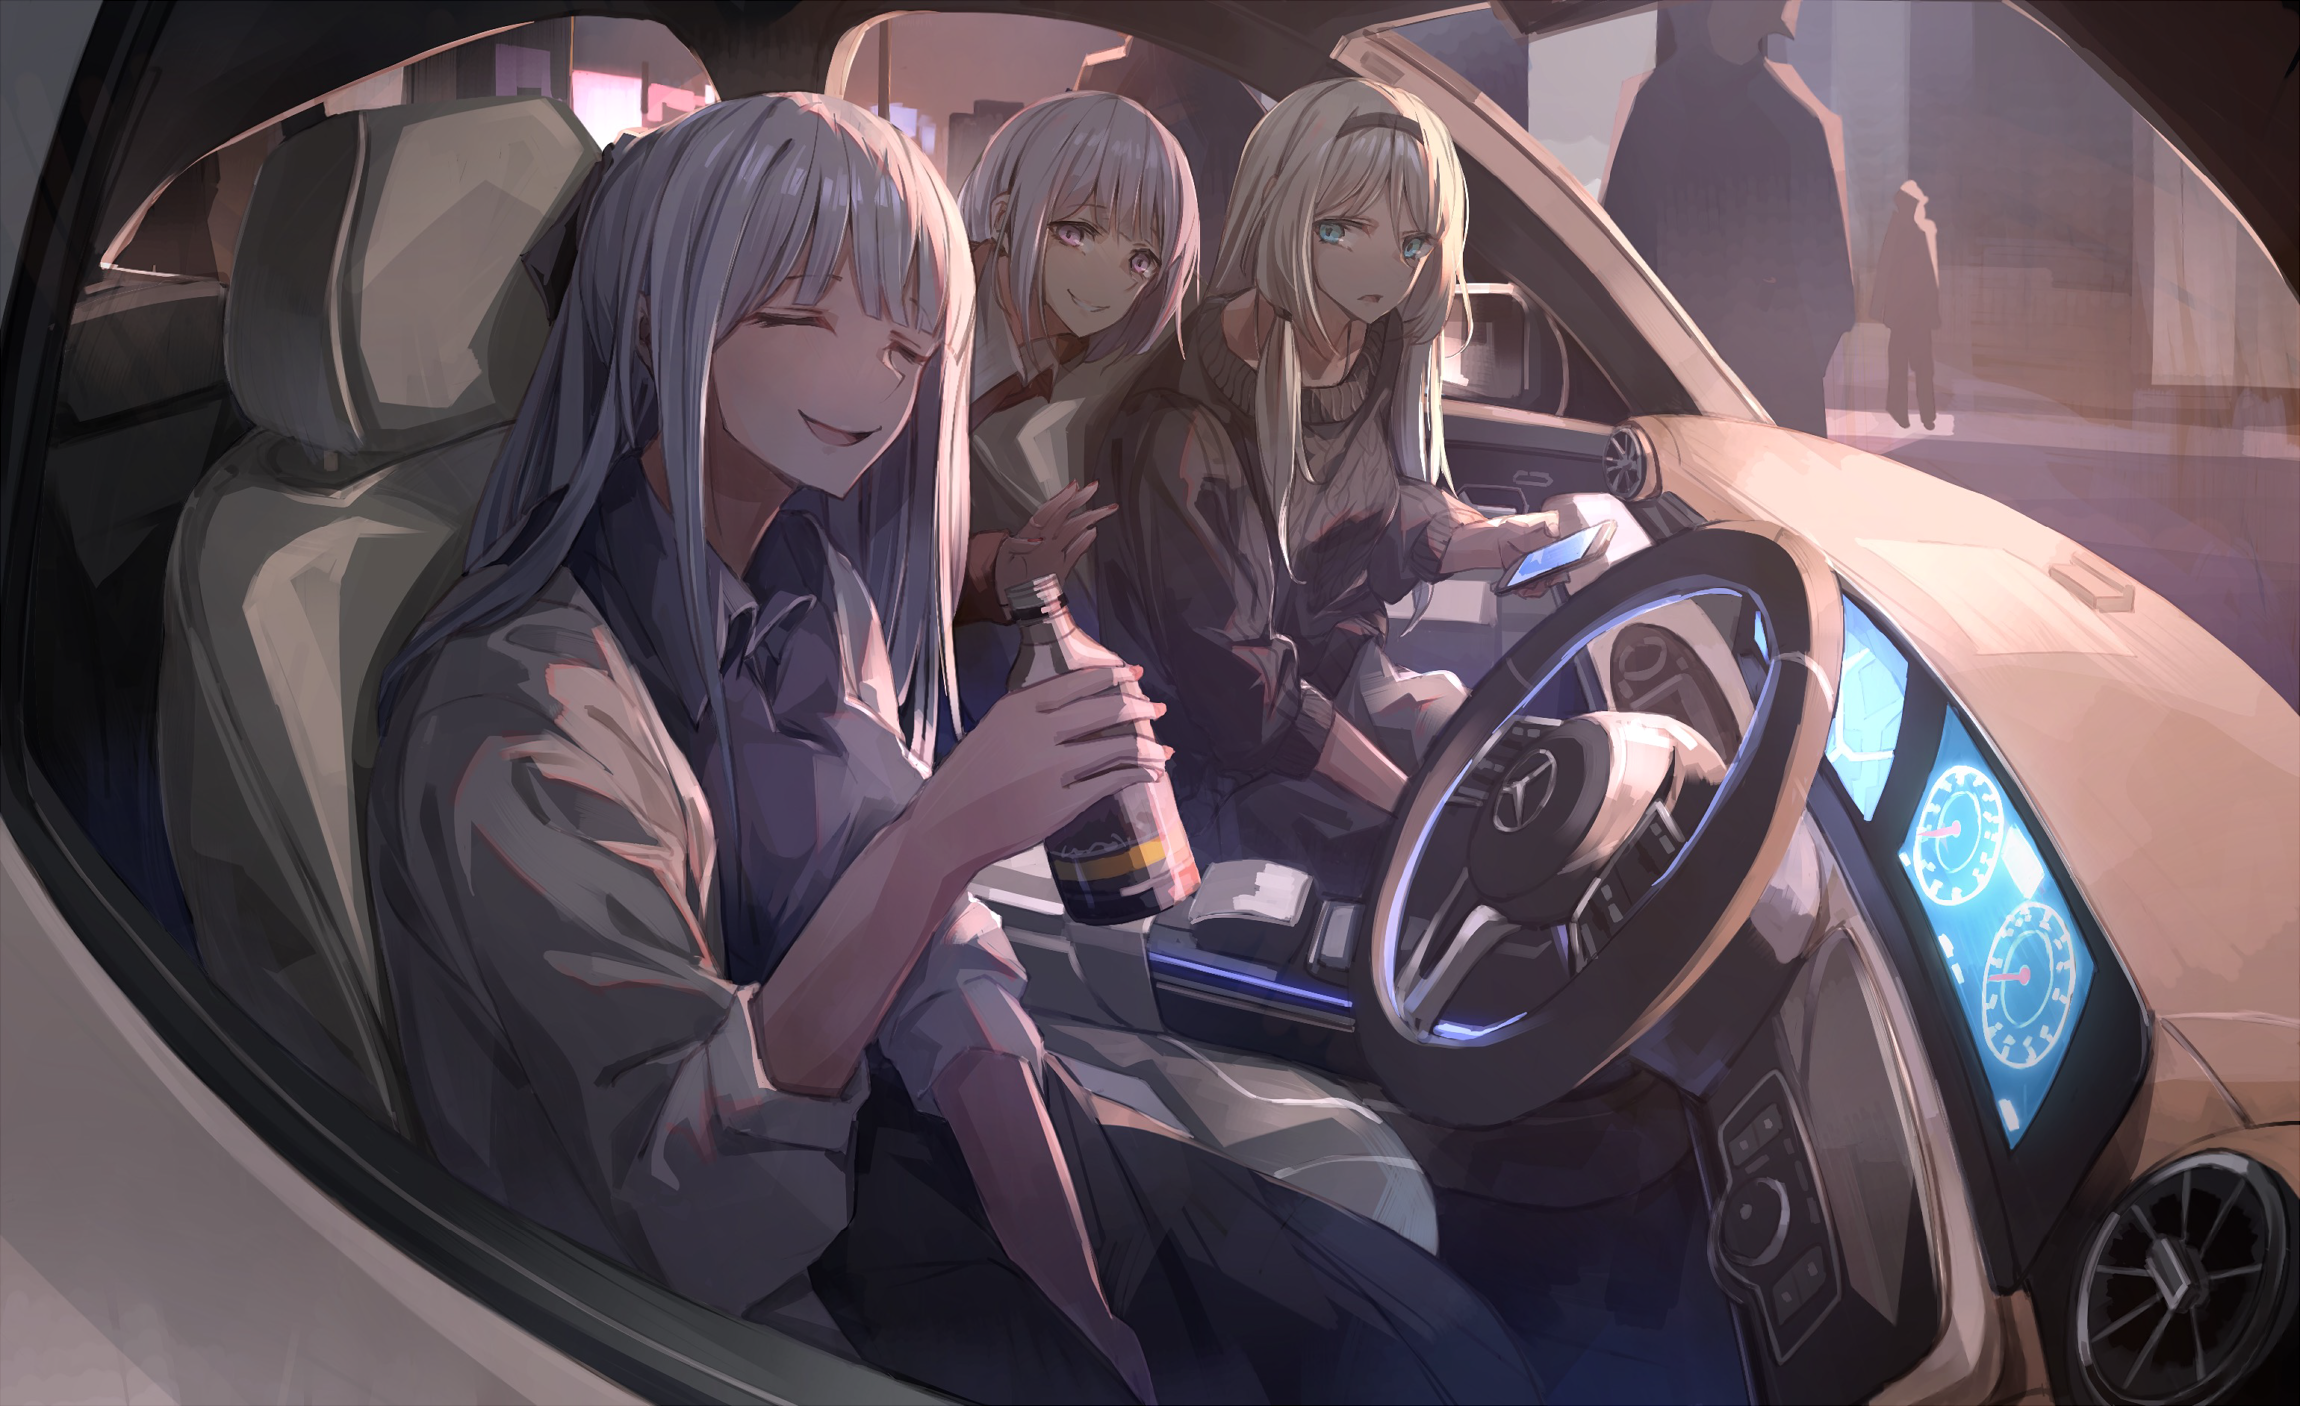 Anime Anime Girls Digital Art Artwork 2D Girls Frontline Mercedes Benz Inside A Car Car Interior 2300x1406